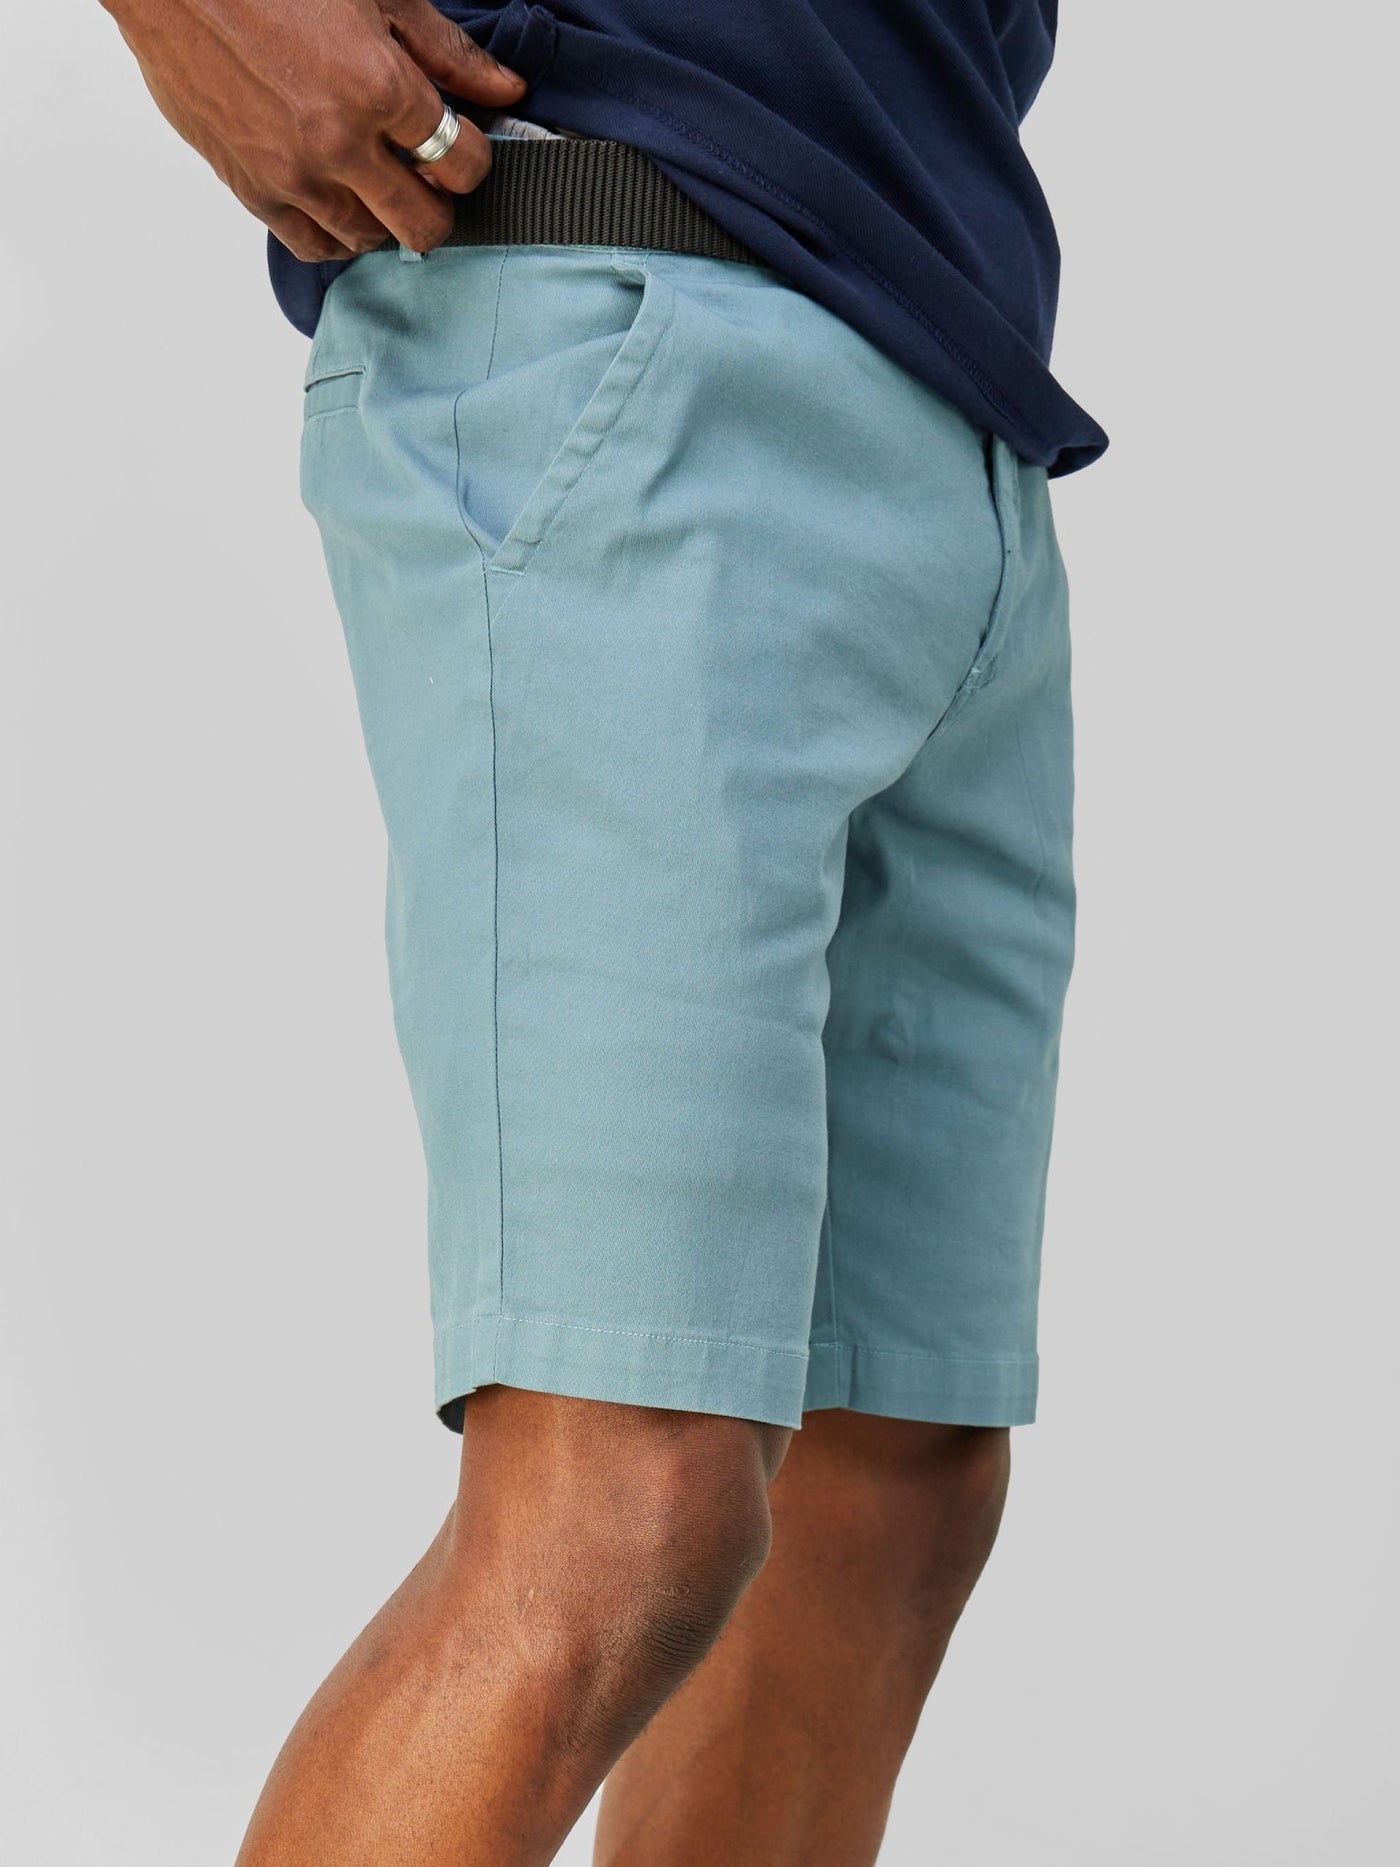 Zetu Men's Chino Shorts - Stone Blue - Shopzetu